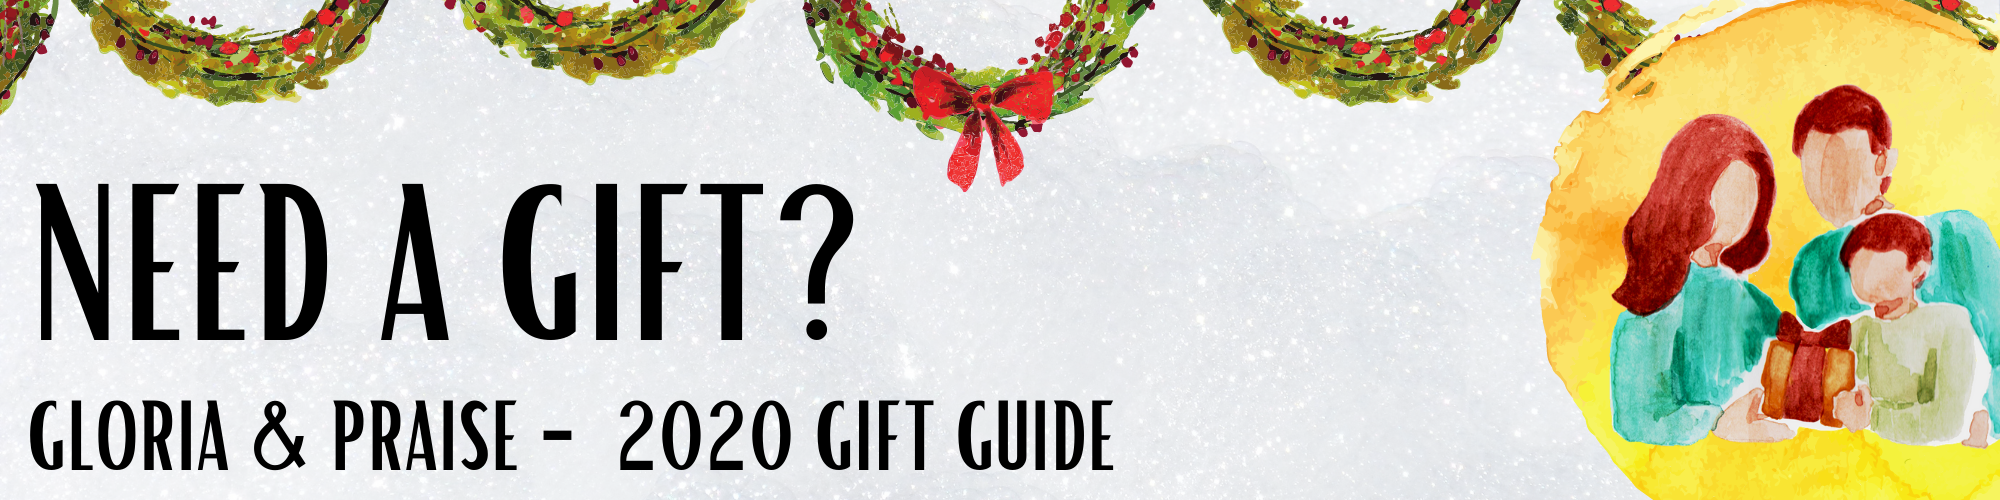 Christmas Gift Guide - Gloria & Praise